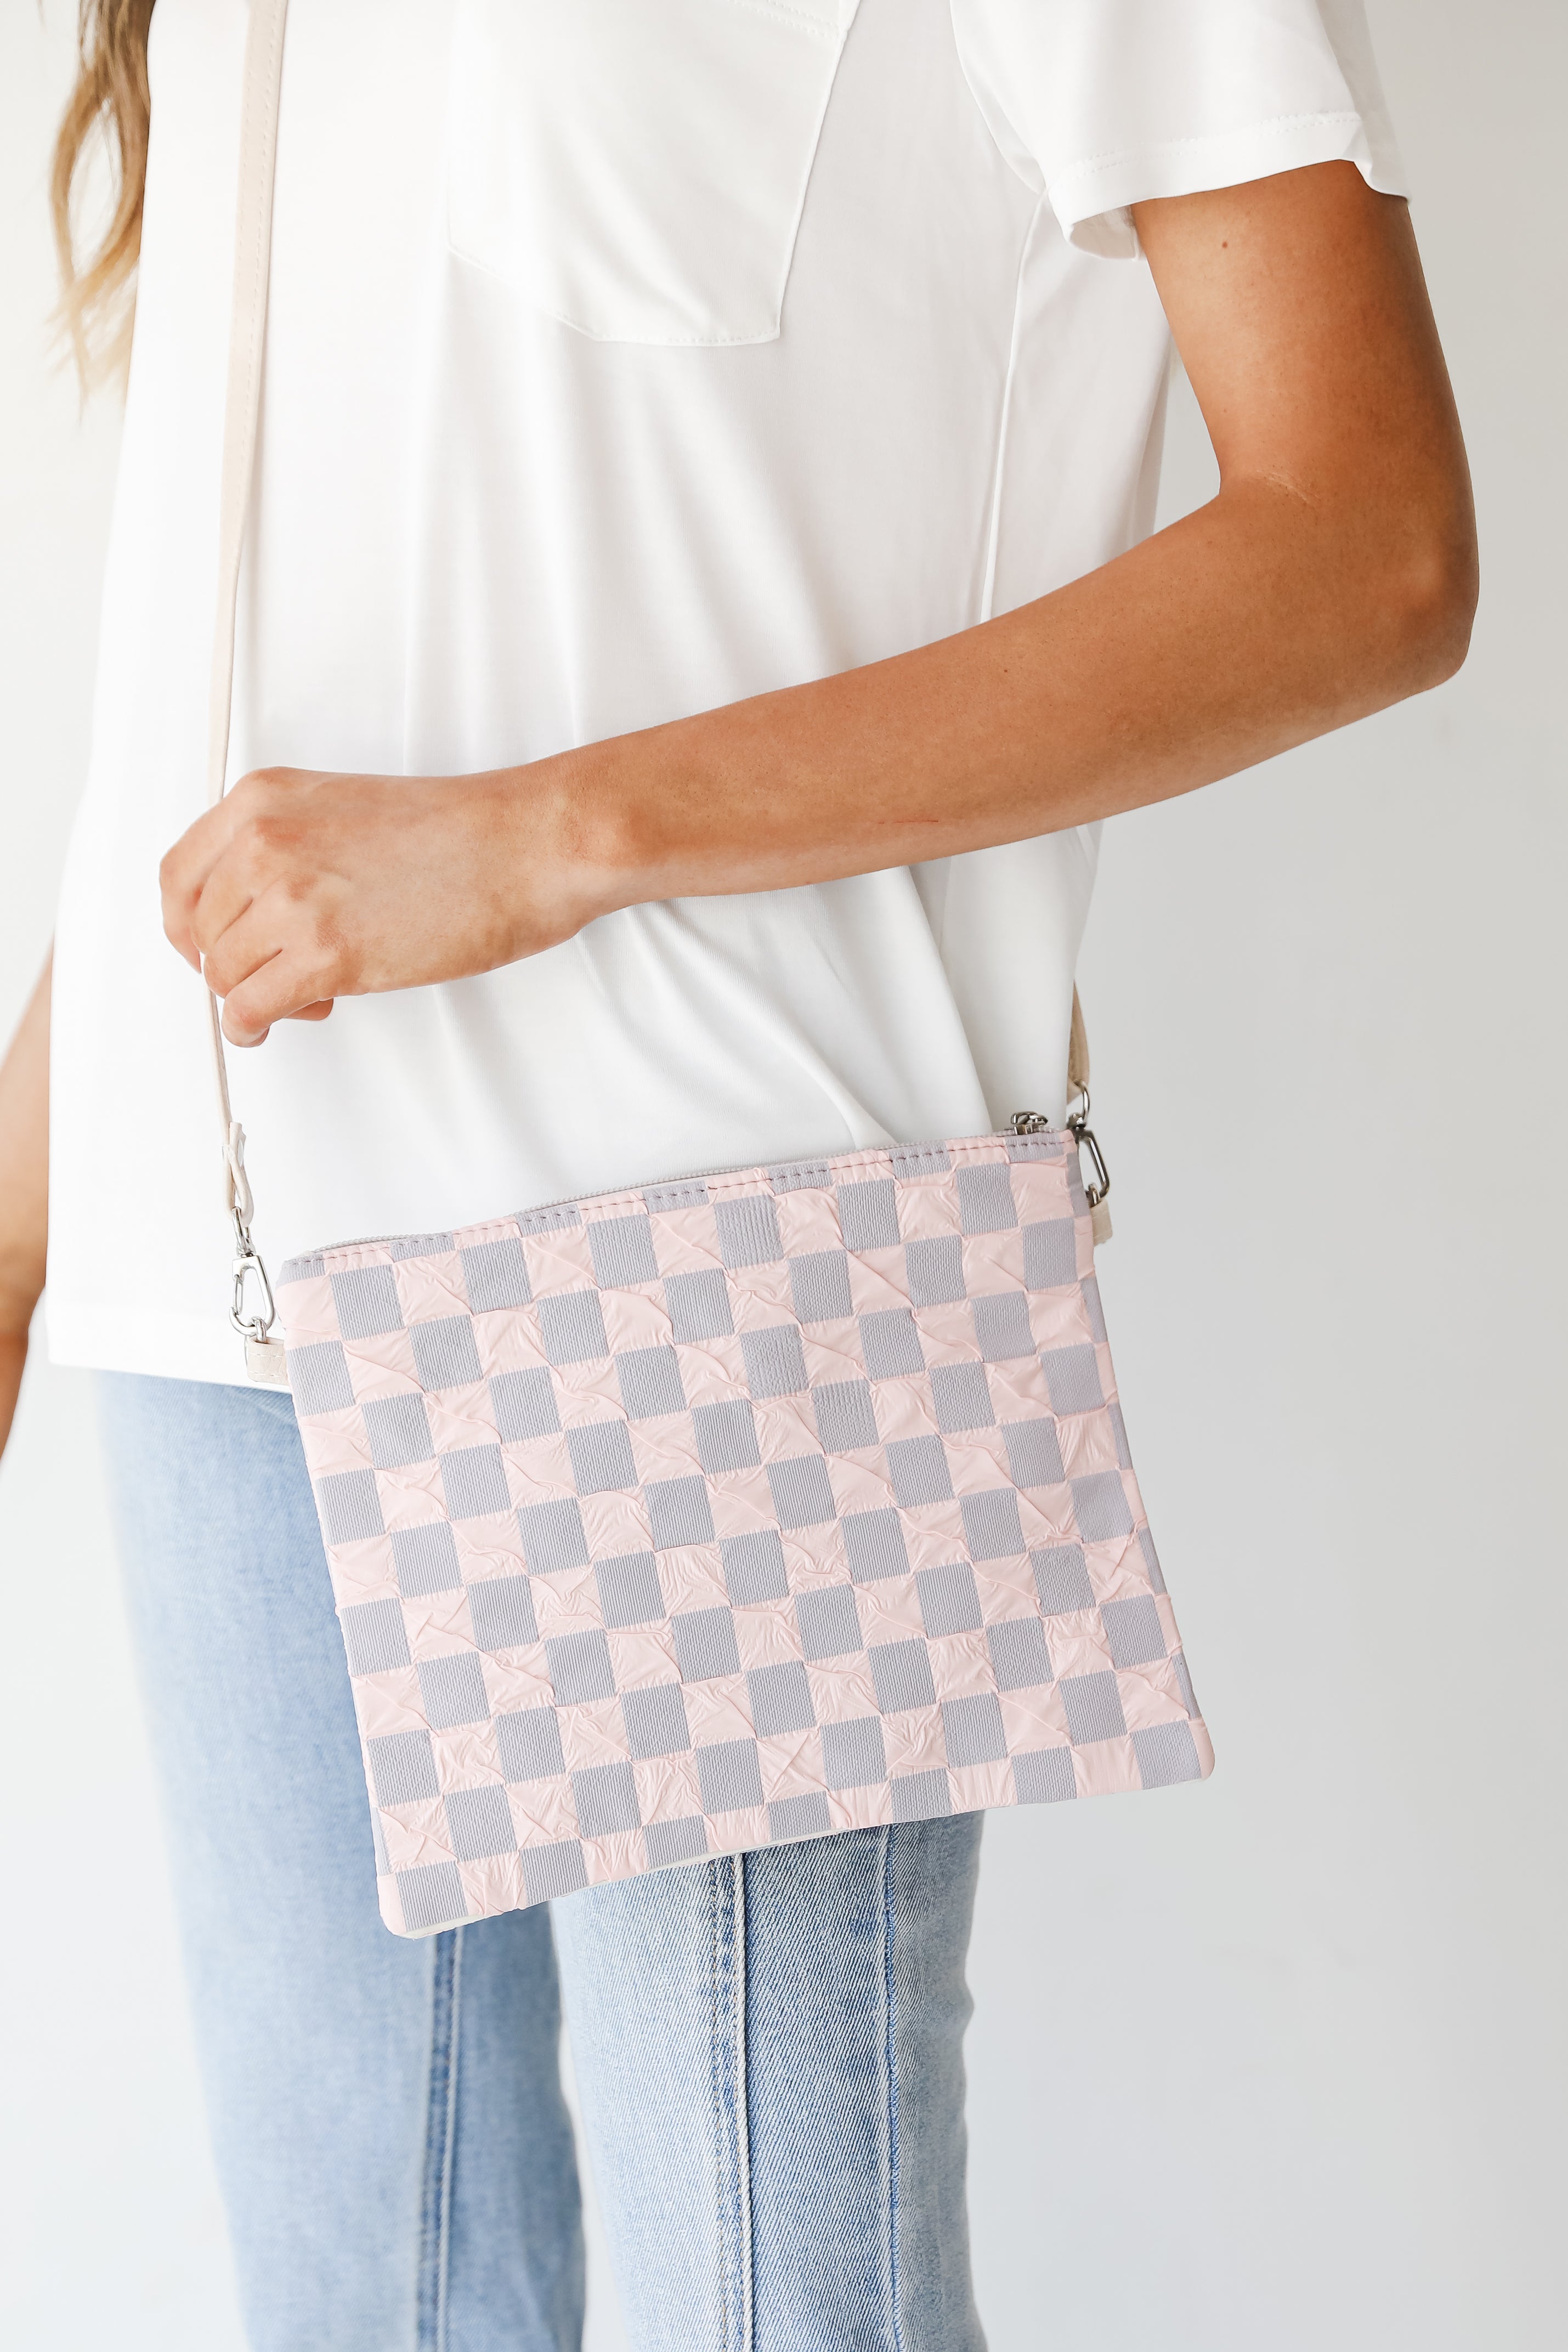 FINAL SALE - Glamorous Poise Blush Checkered Crossbody Bag